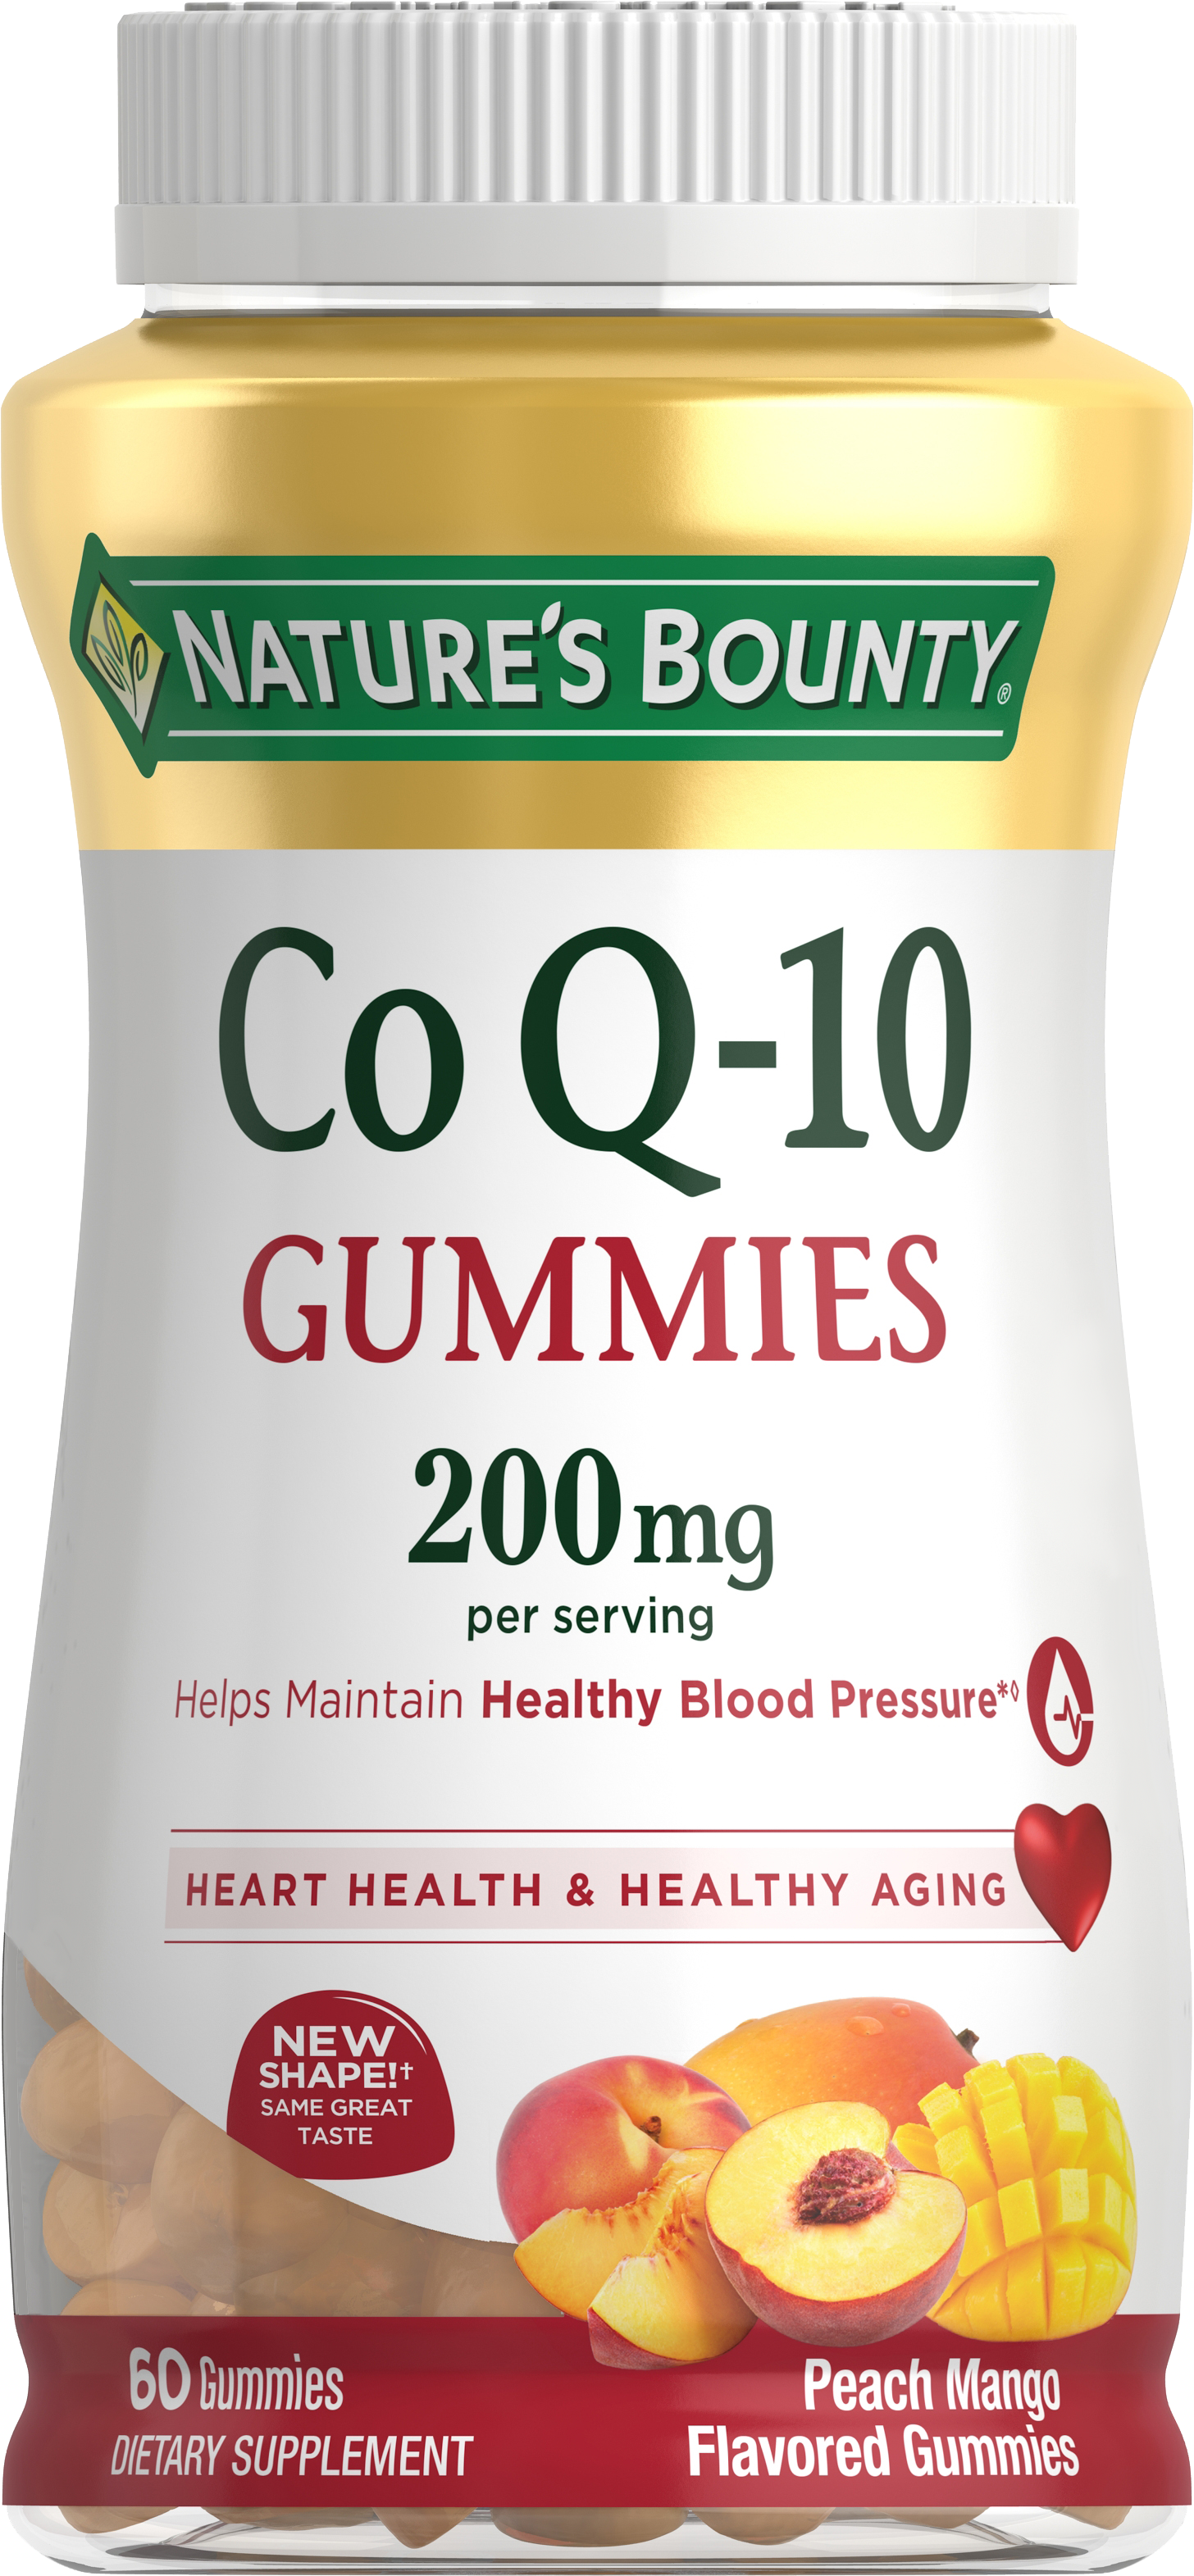 Nature's Bounty® Co Q-10 Gummies